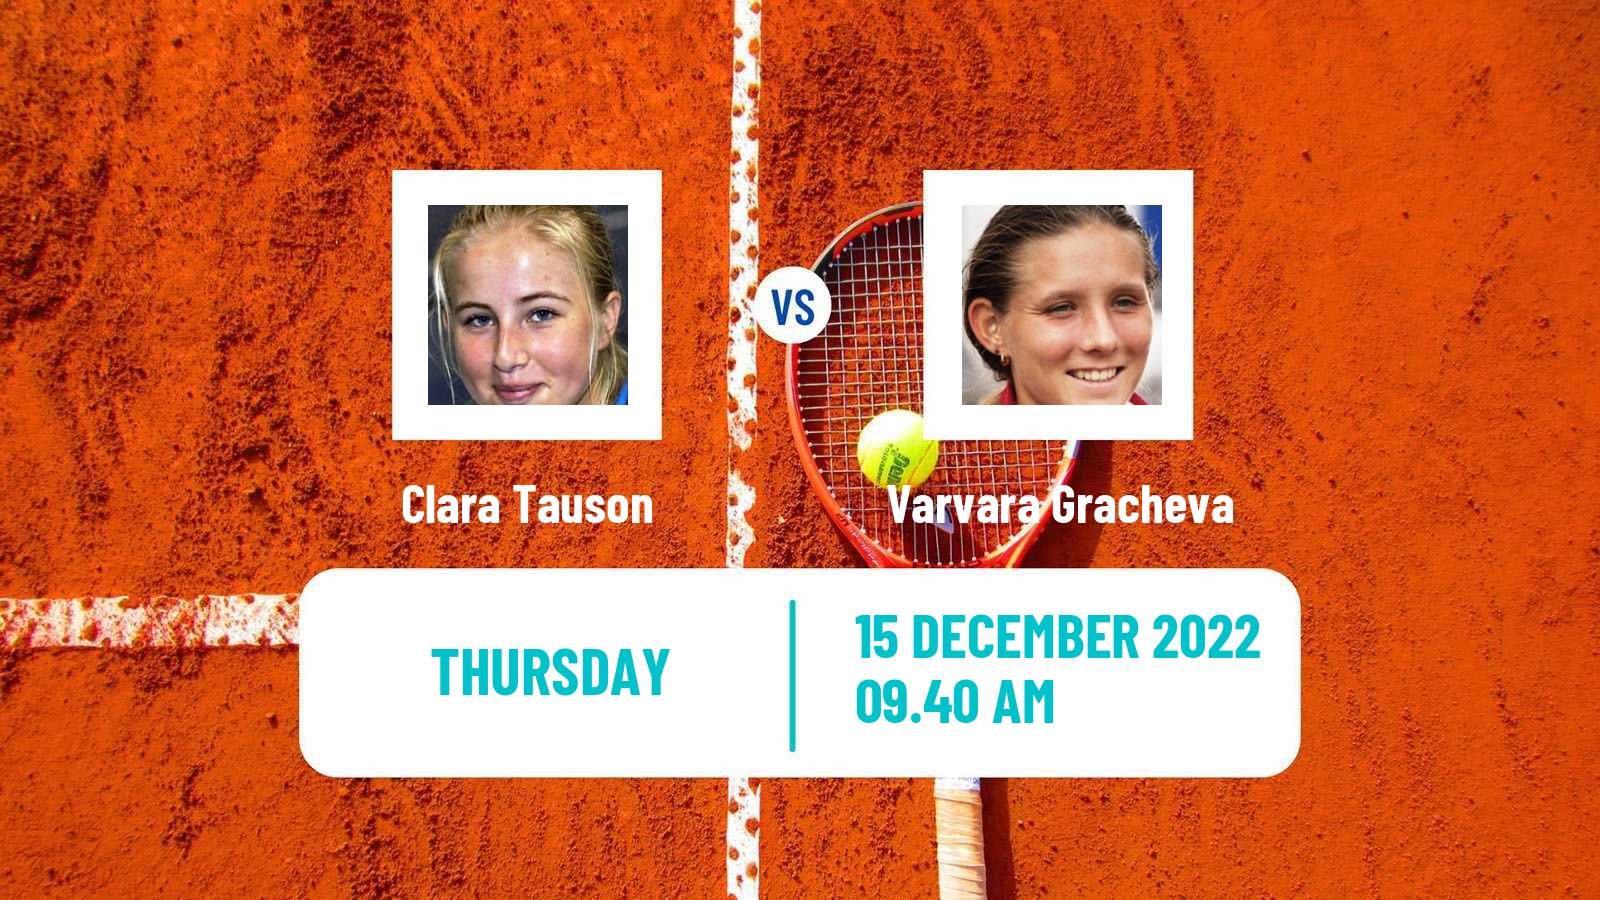 Tennis ATP Challenger Clara Tauson - Varvara Gracheva